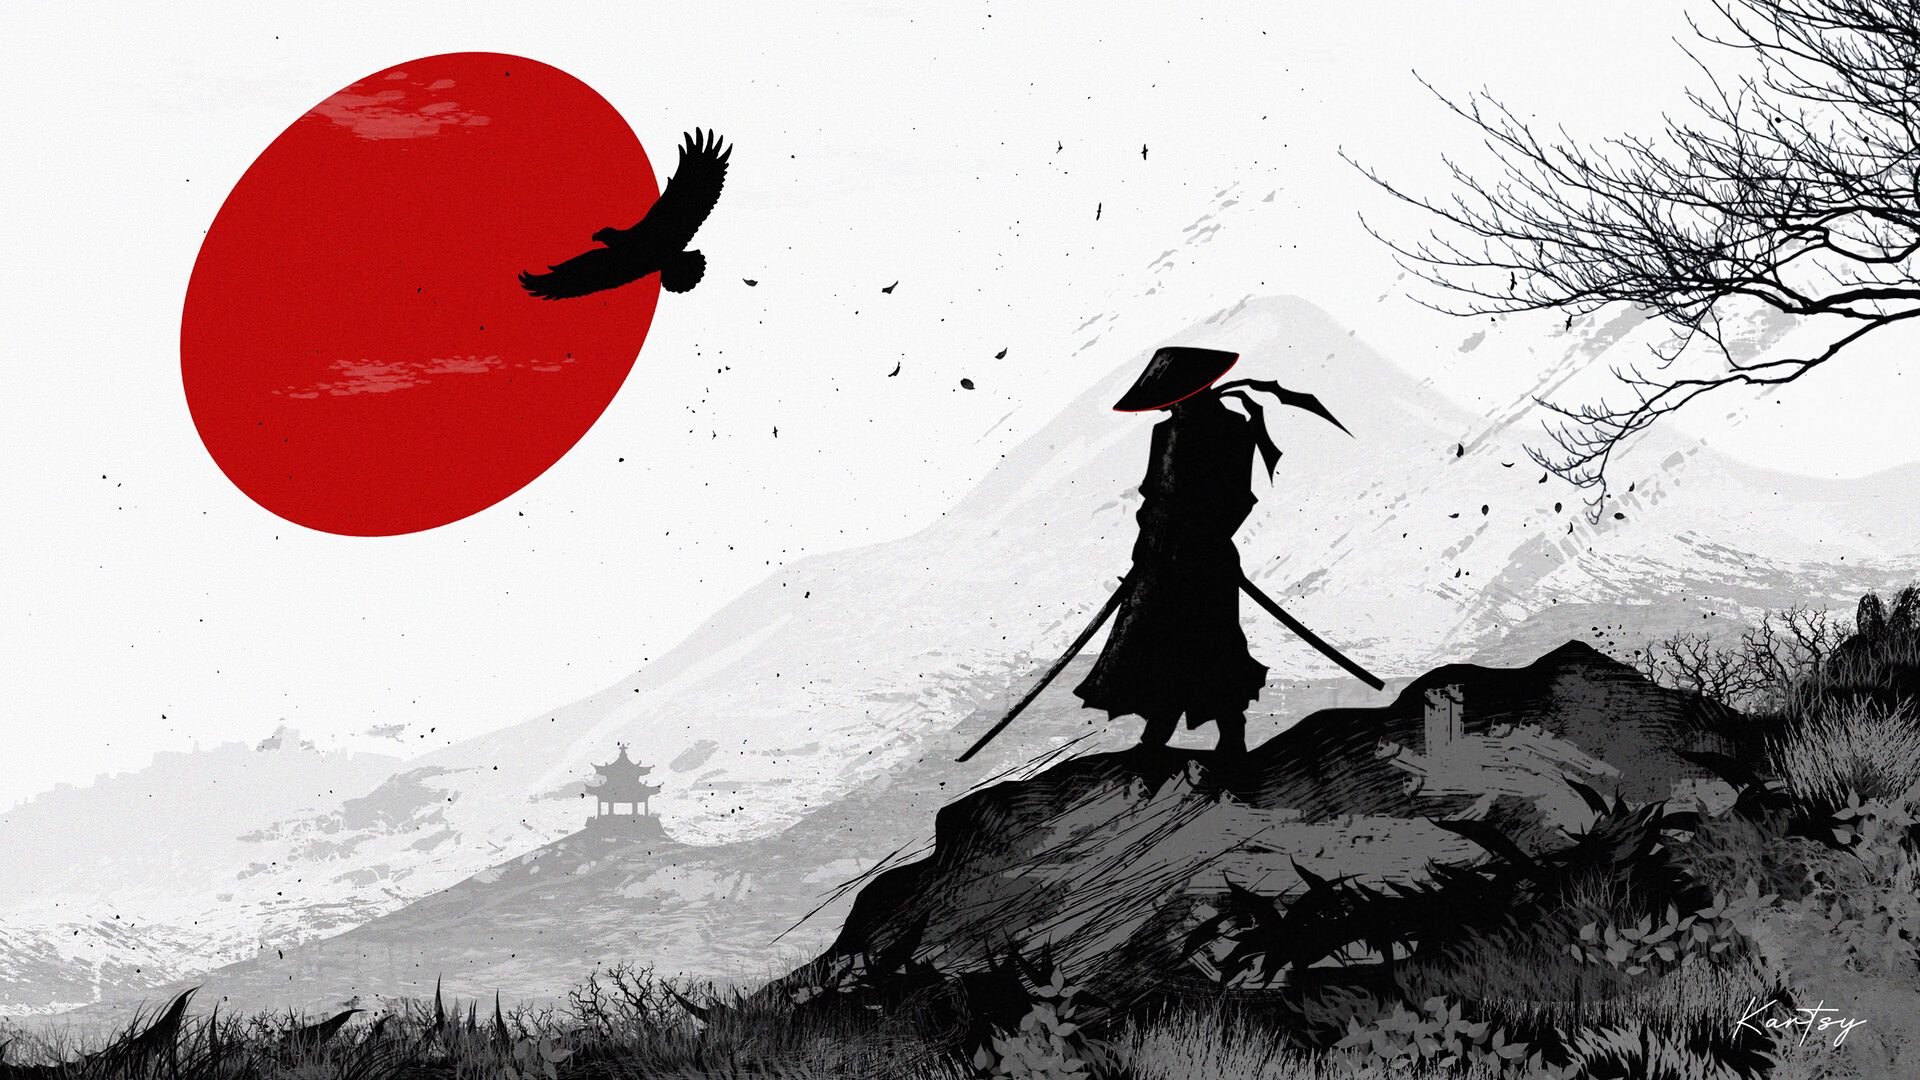 Download wallpaper 1920x1080 samurai, warrior, silhouette, art, black and white full hd, hdtv, fhd, 1080p HD background